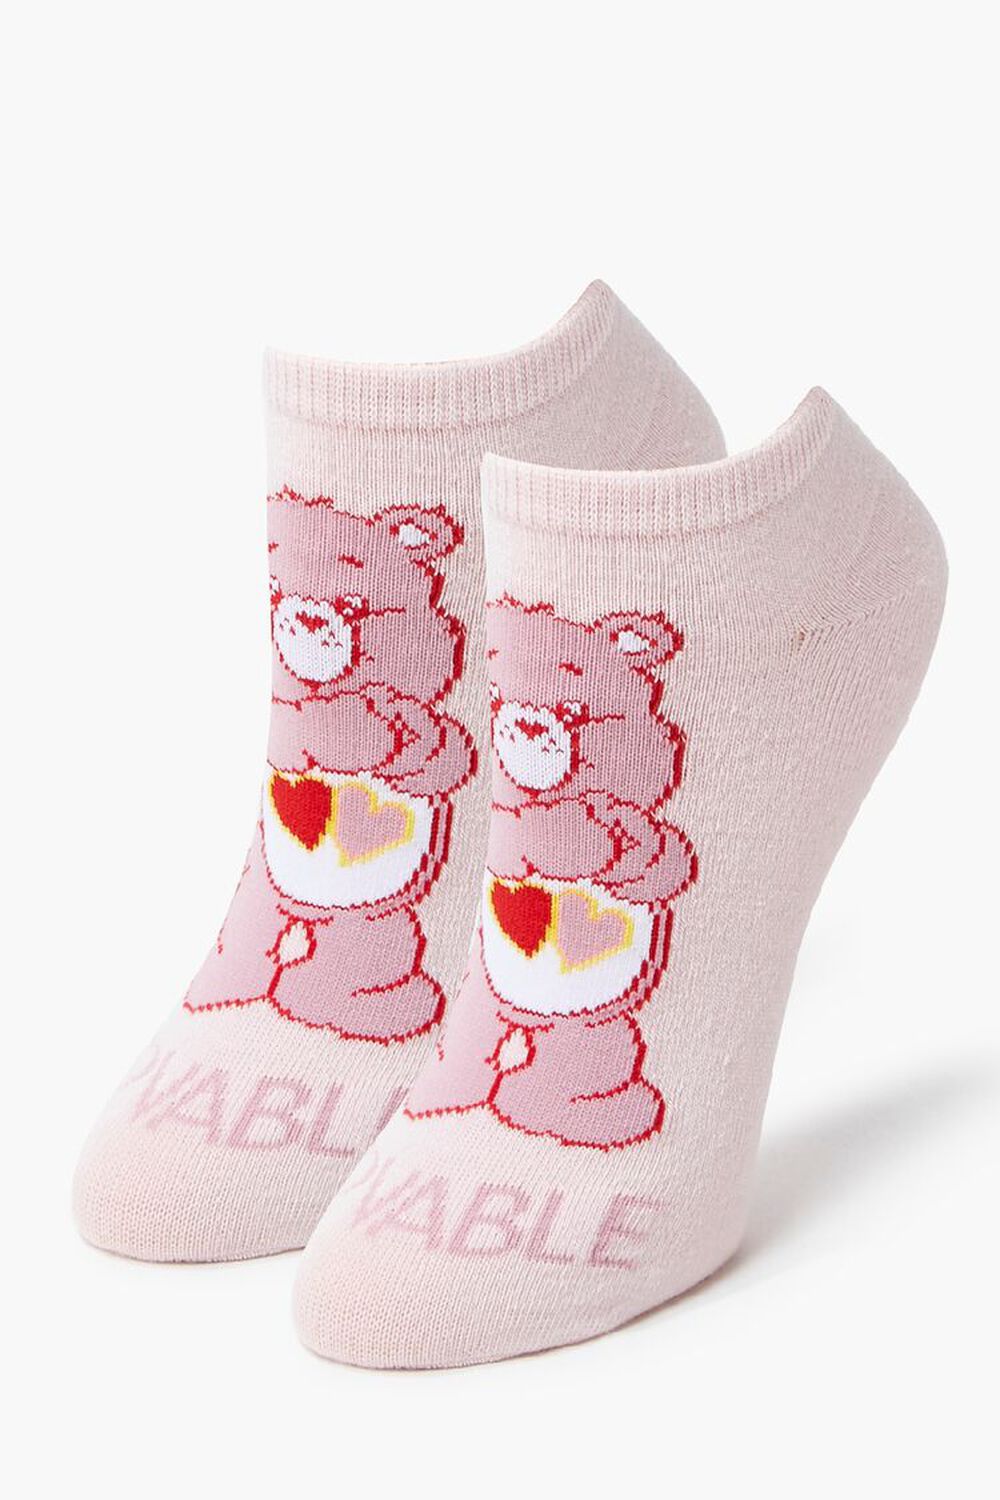 PINK/MULTI Lovable Care Bears Ankle Socks, image 1